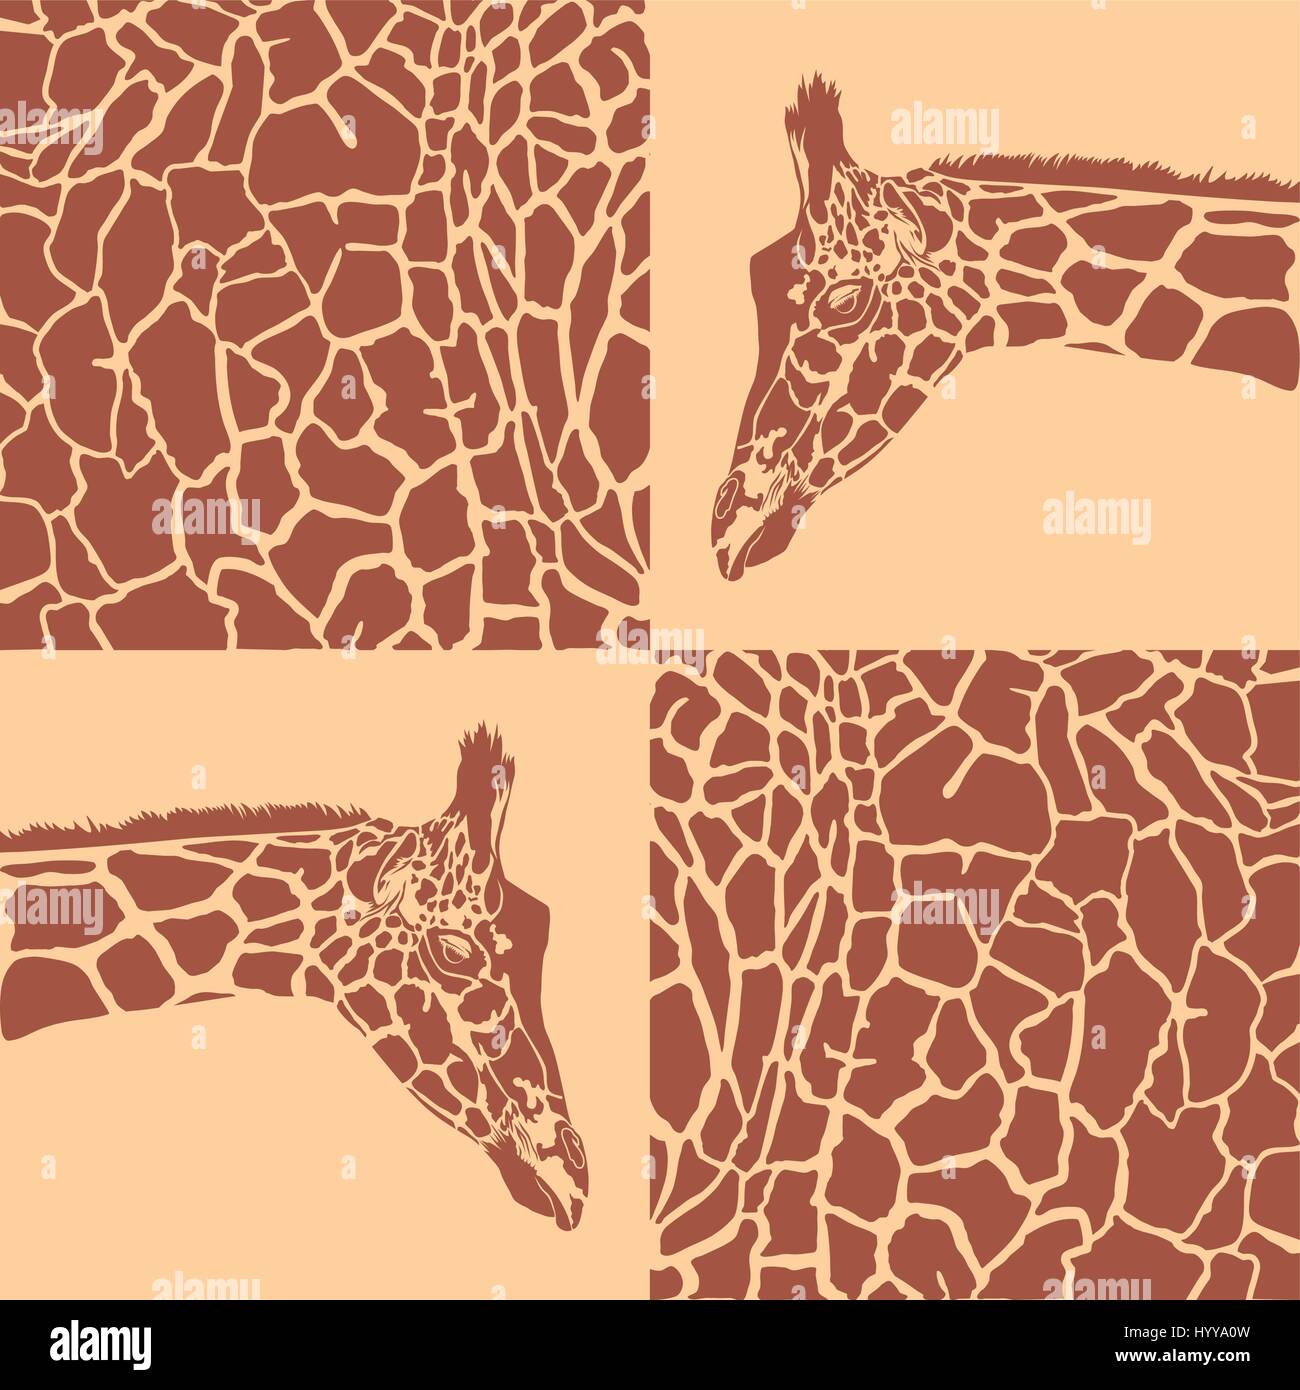 Giraffe patterns beige and brown Stock Vector